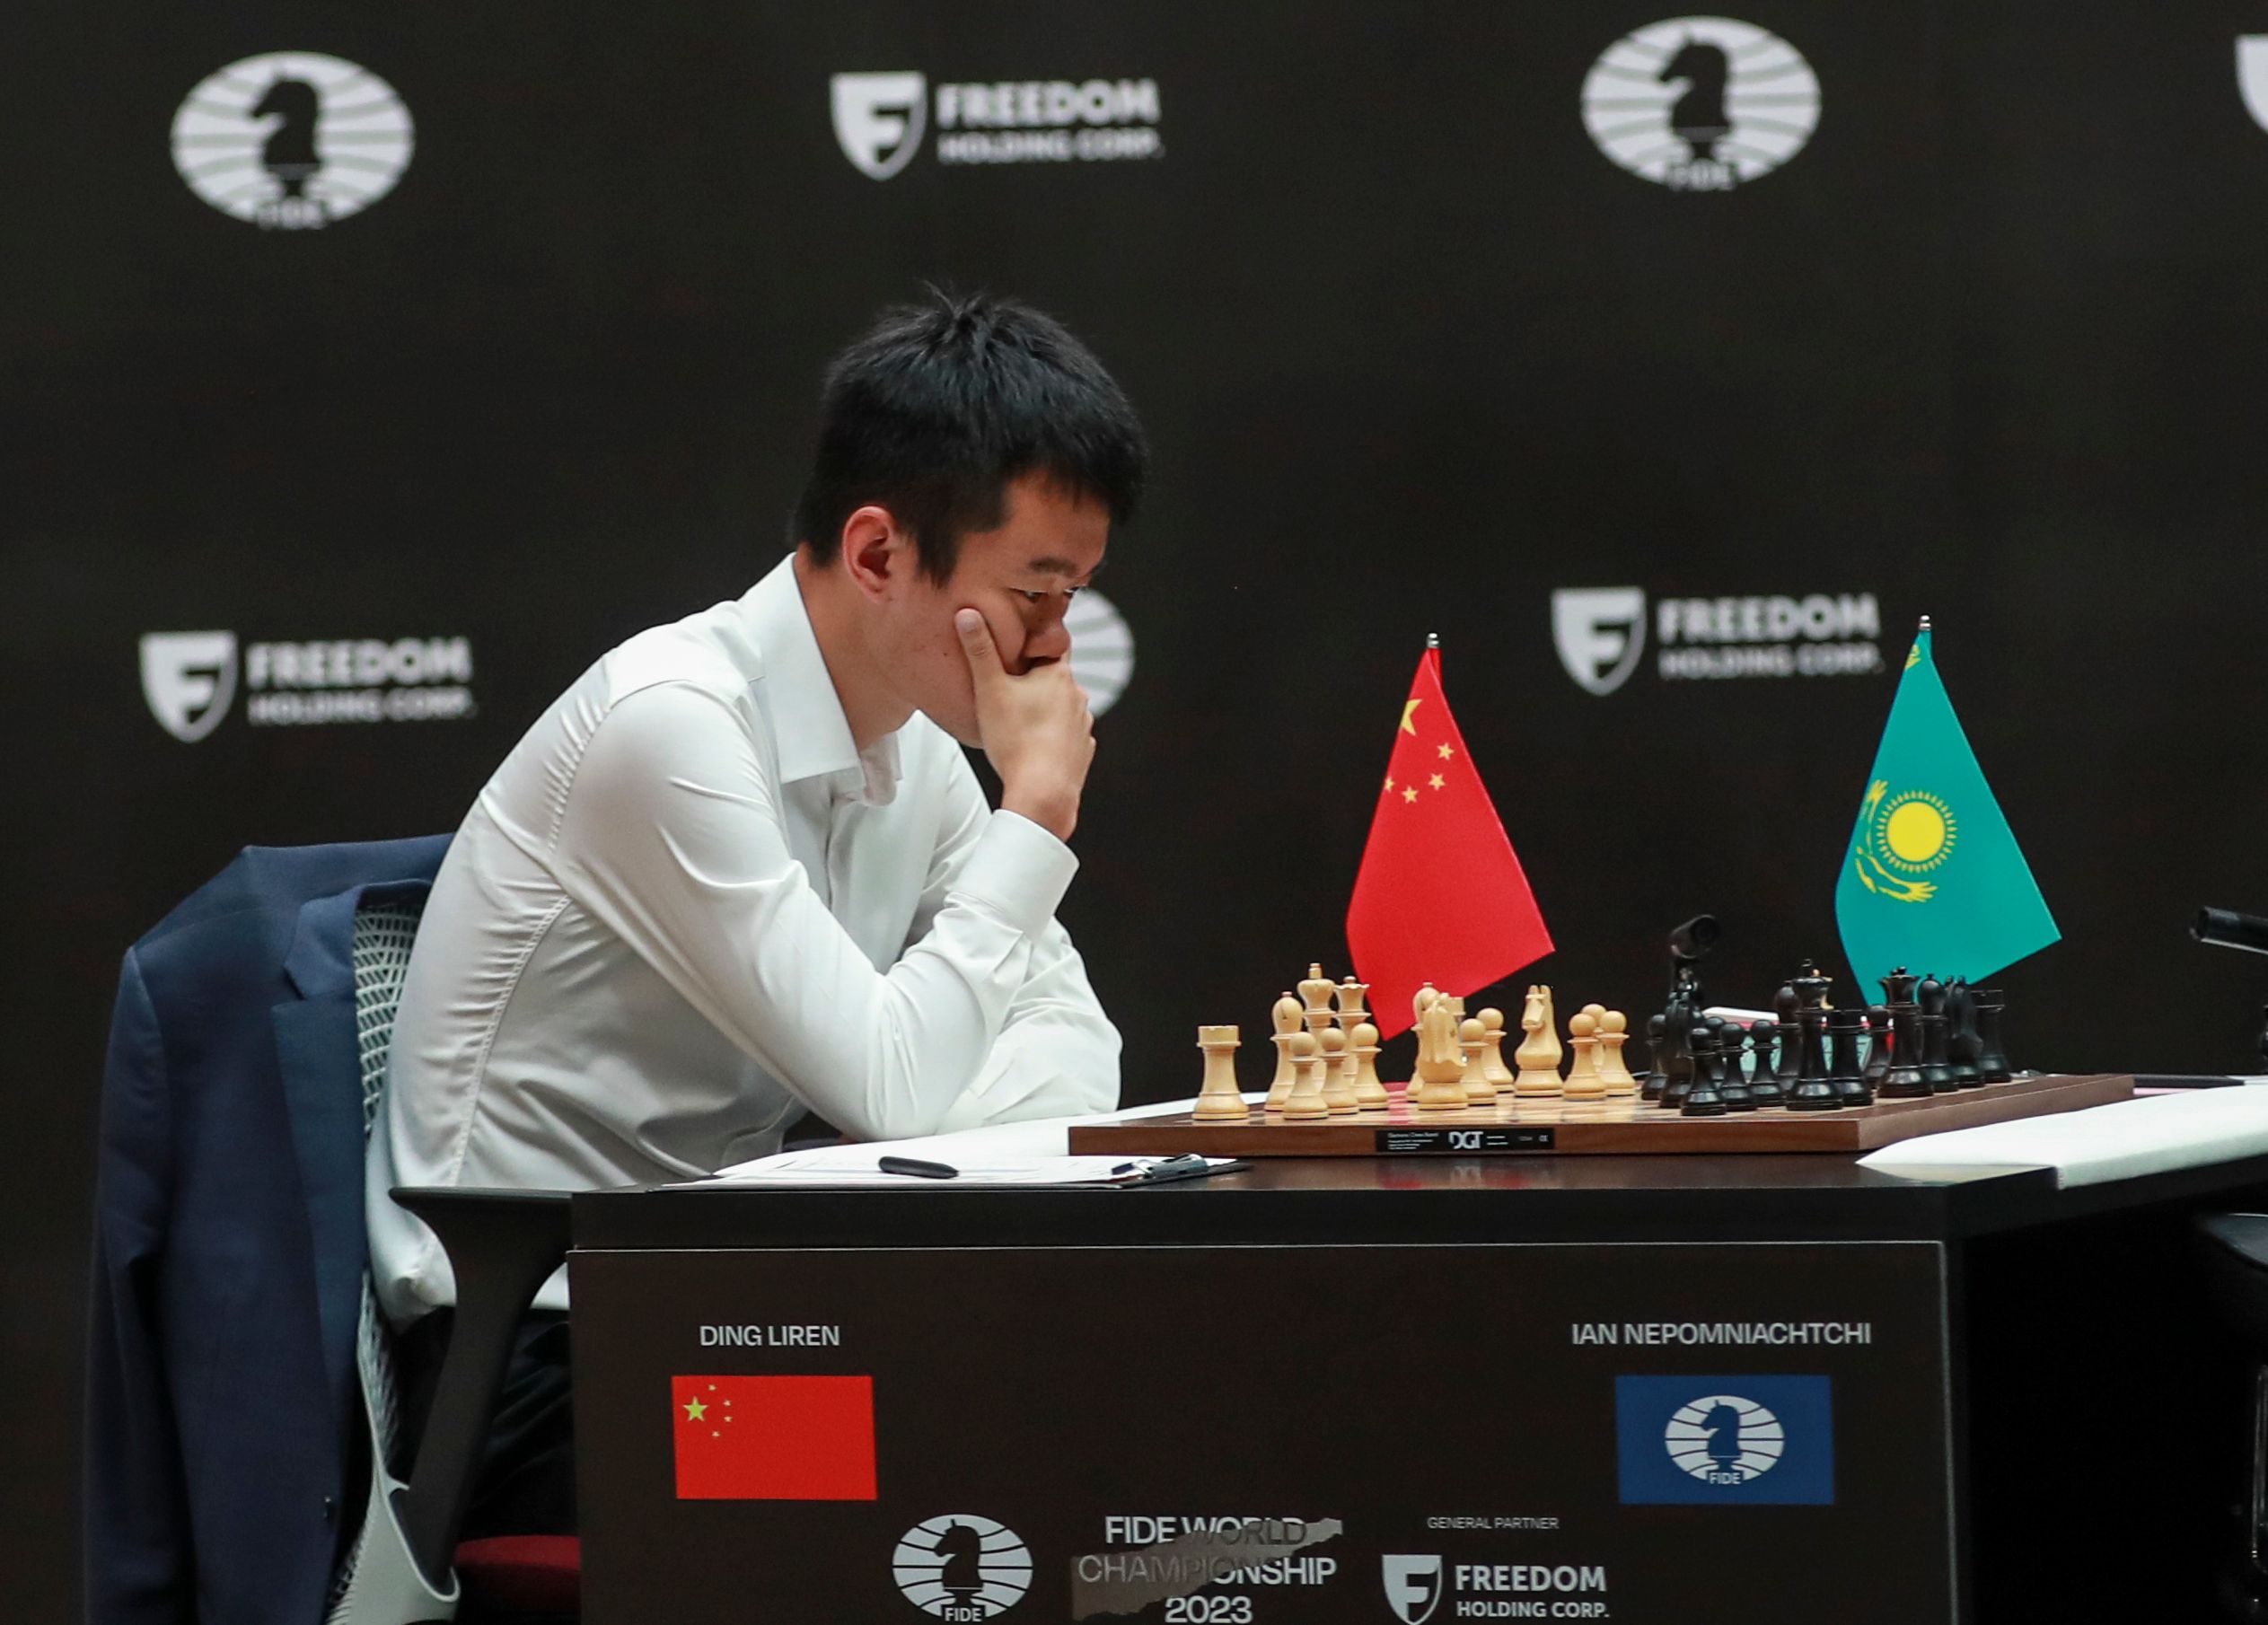 Ding defeats Carlsen in the first set of their Tour Final match